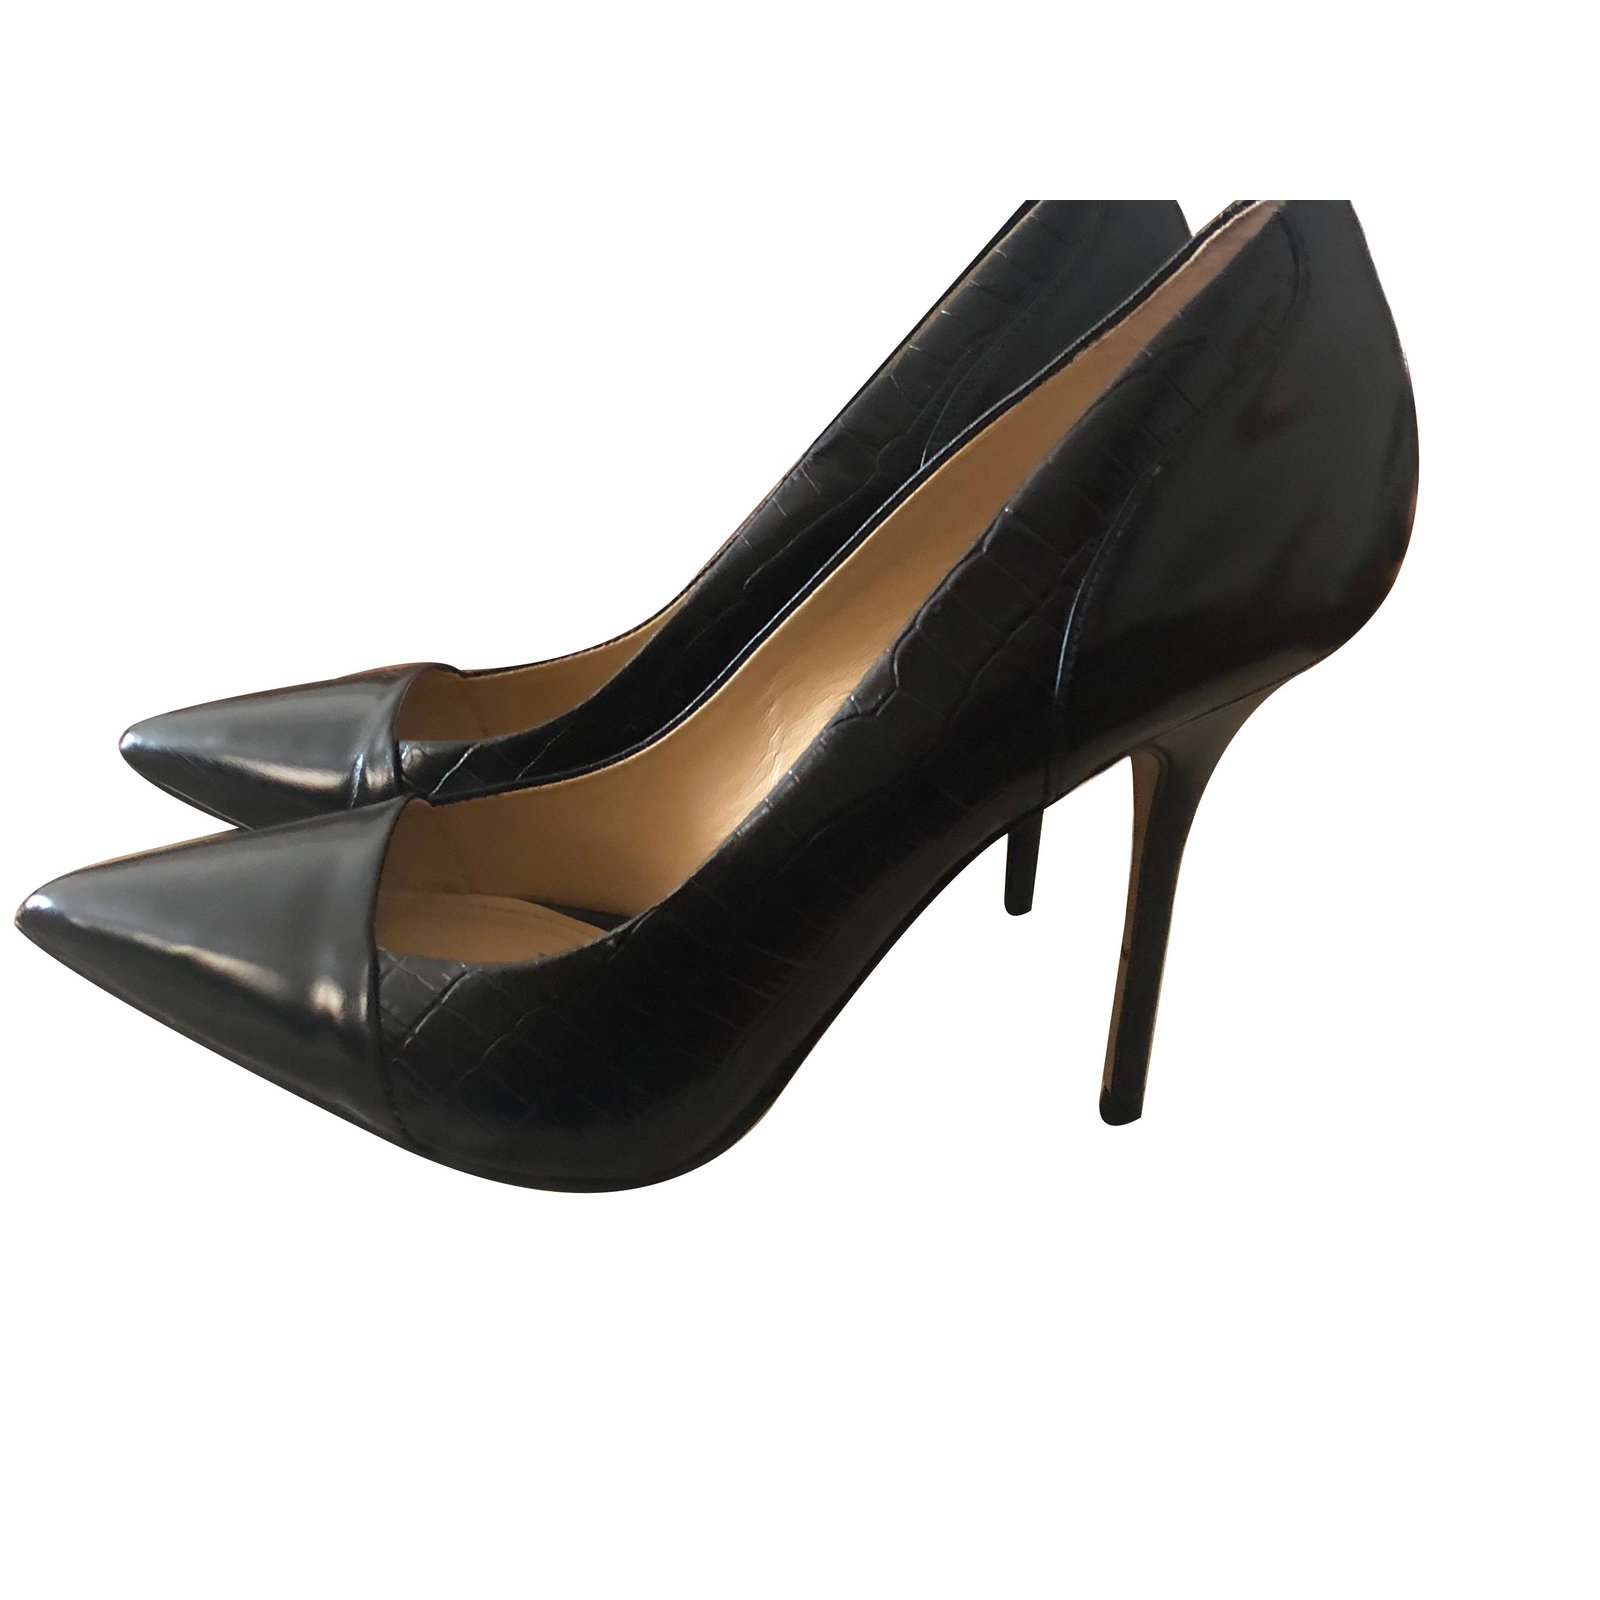 Leather heels BUFFALO Black size 41 EU in Leather - 34124780